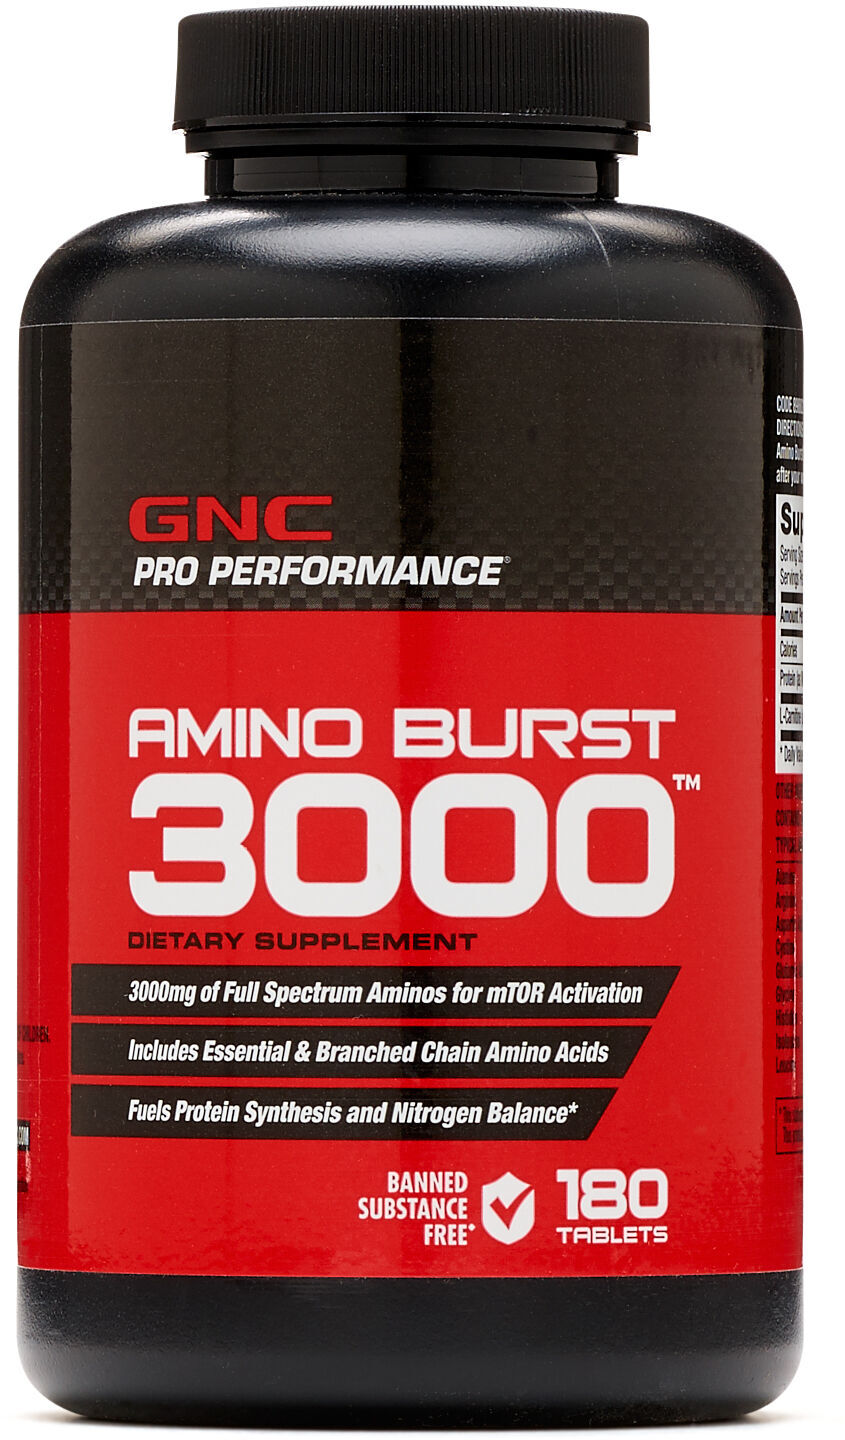 Gnc Amino Burst 3000 News Reviews And Prices At Priceplow